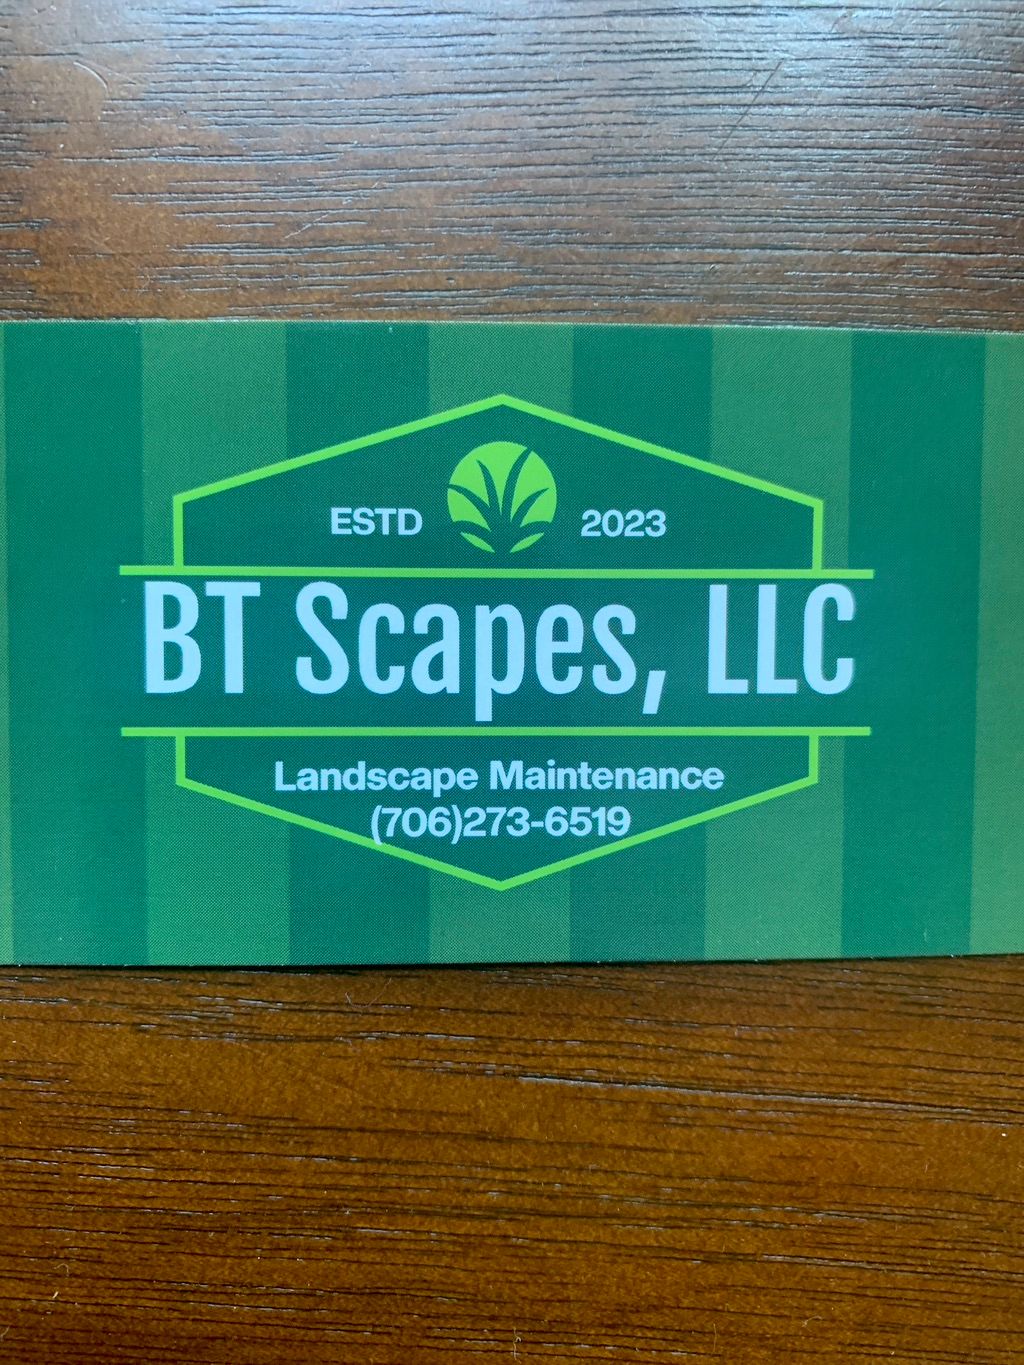 B T Scapes, LLC